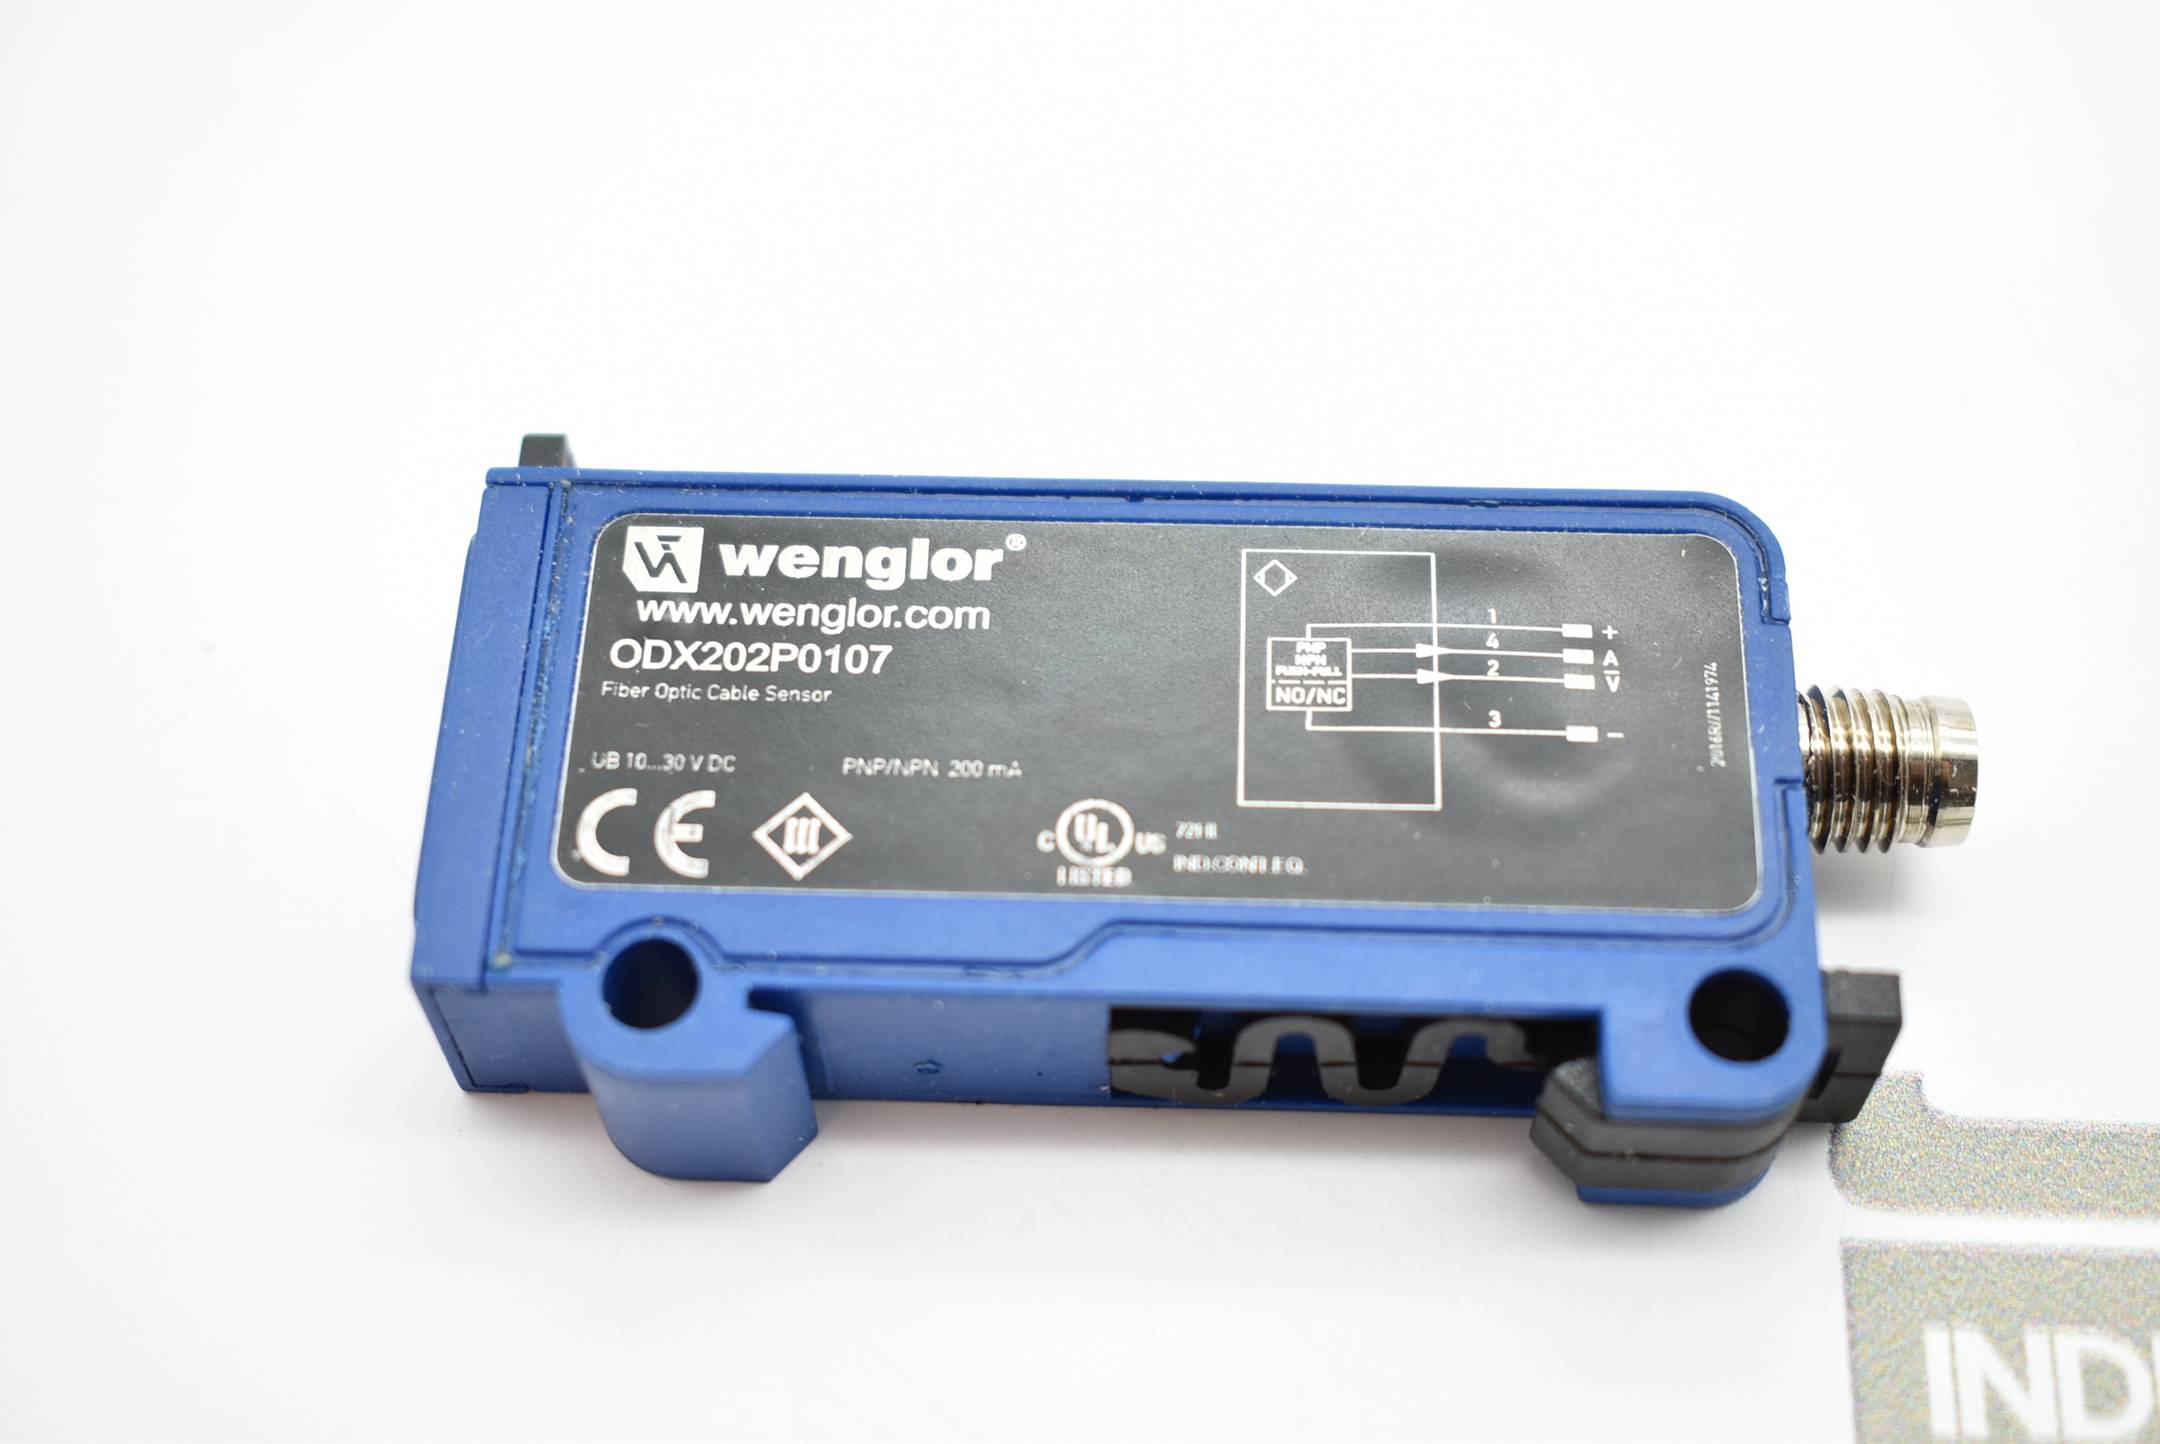 Wenglor Fiber Optic Cable Sensor ODX202P0107